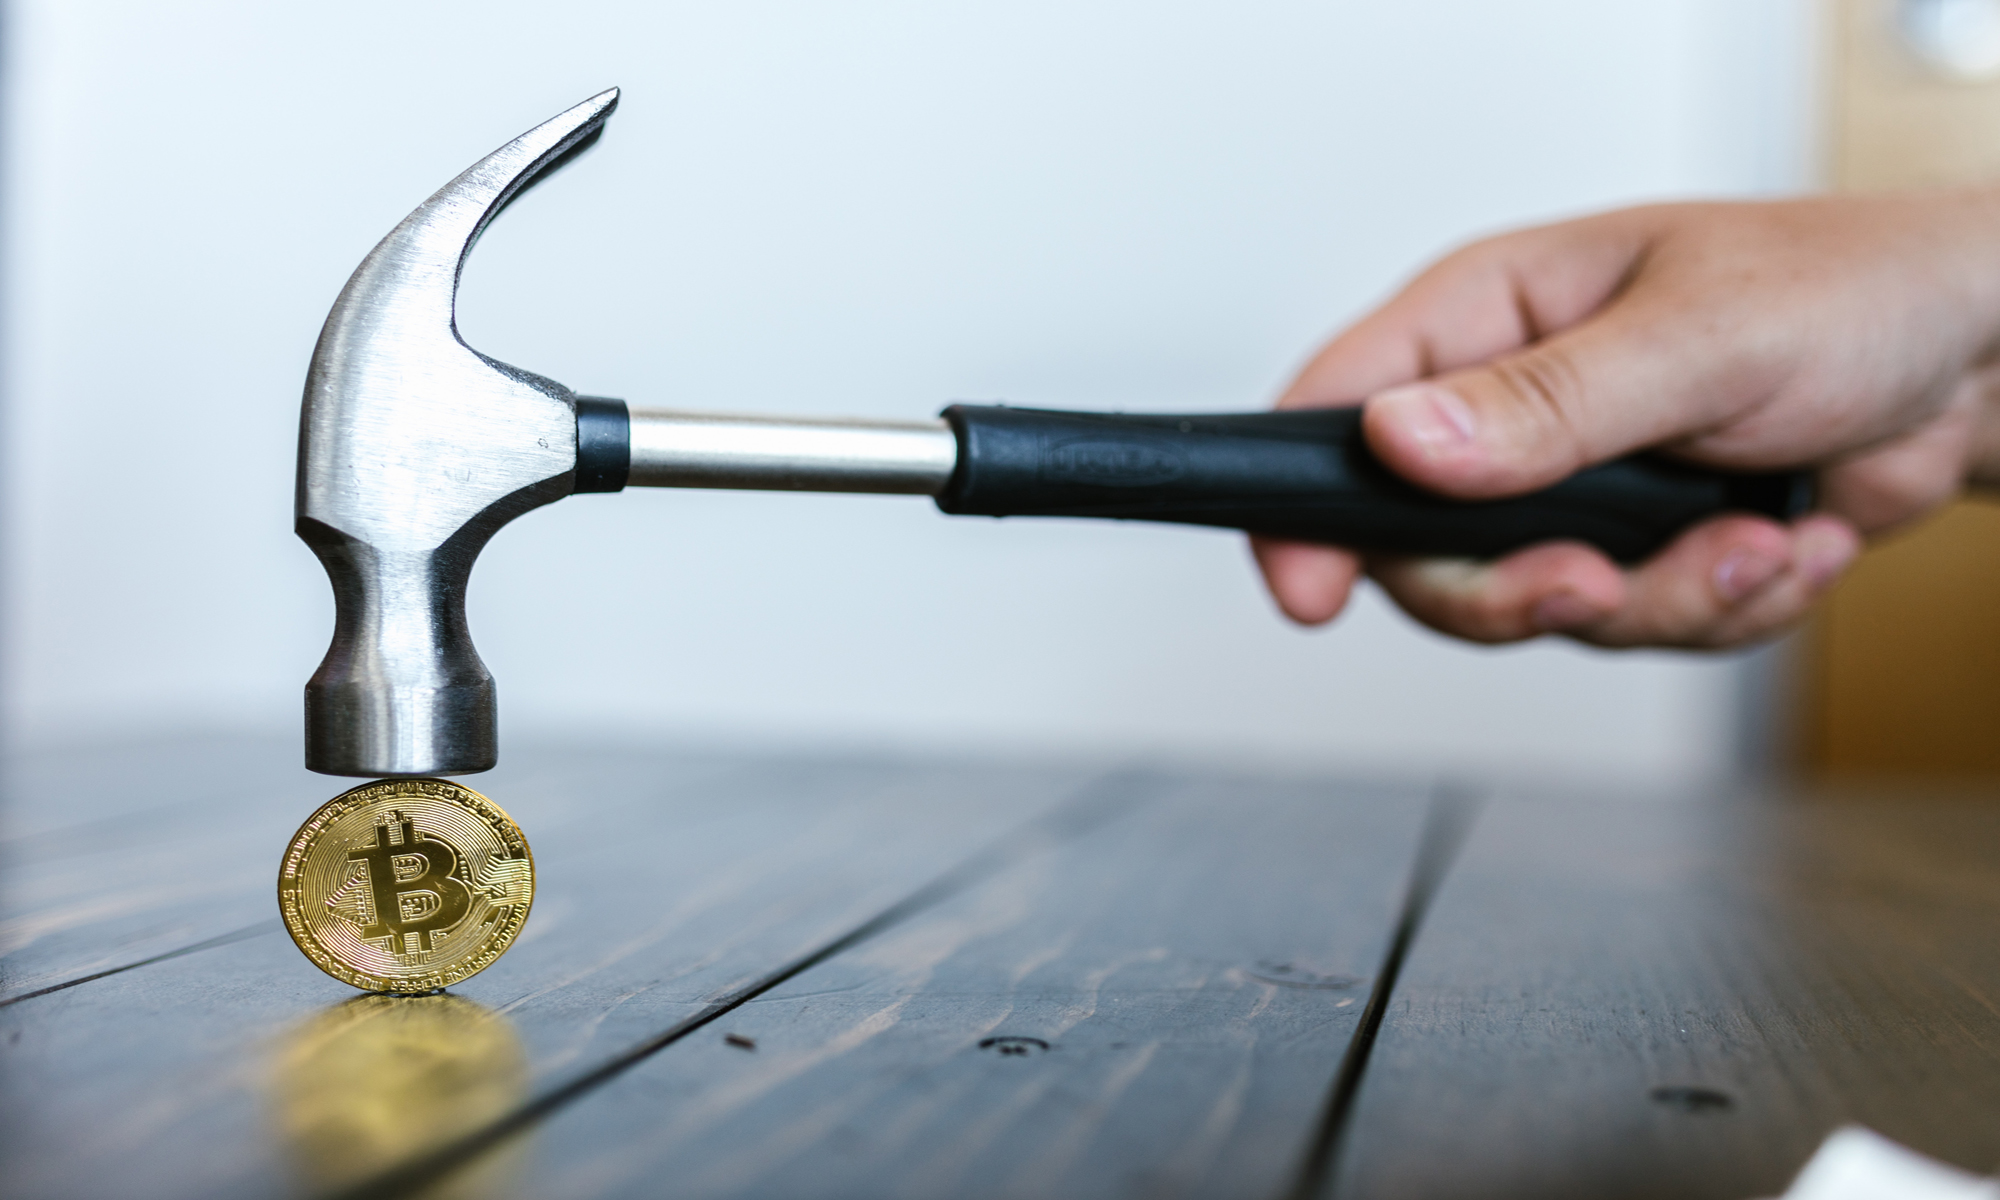 hammer and bitcoin